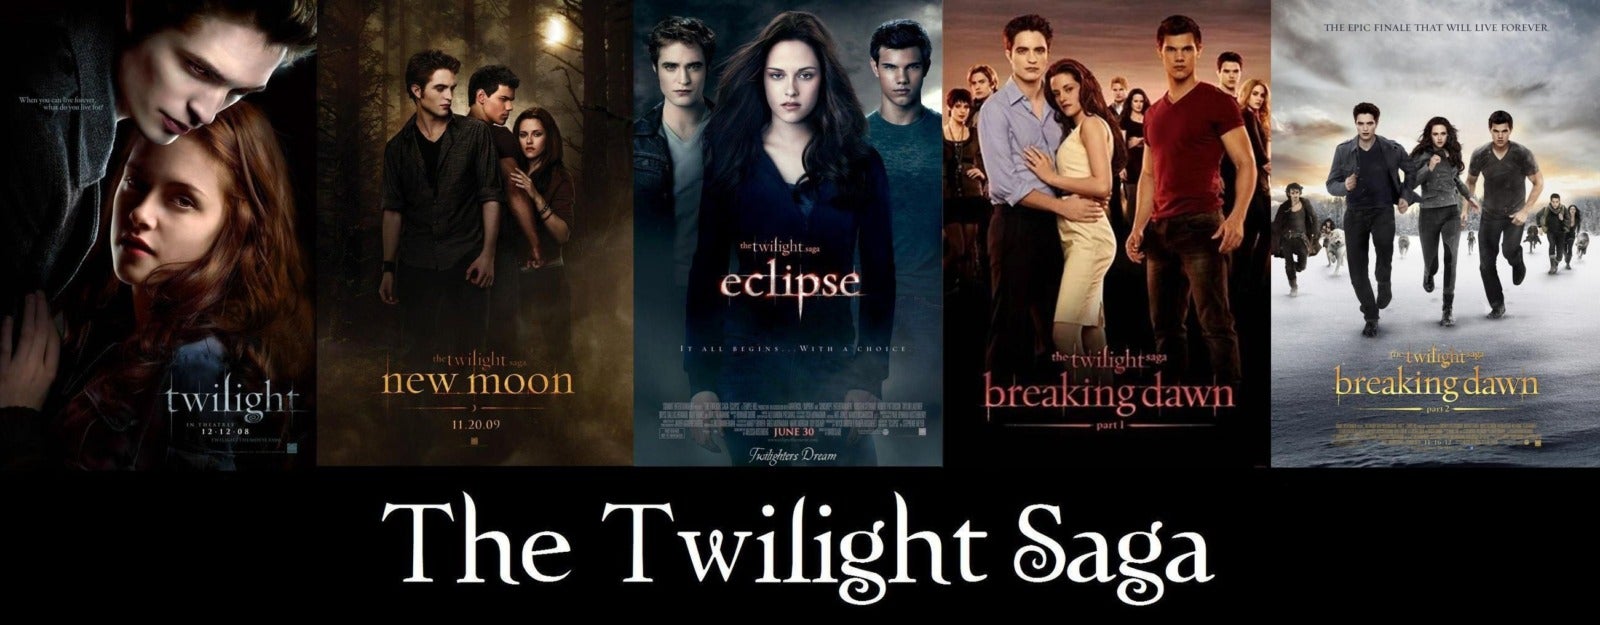 the Twilight saga movie posters